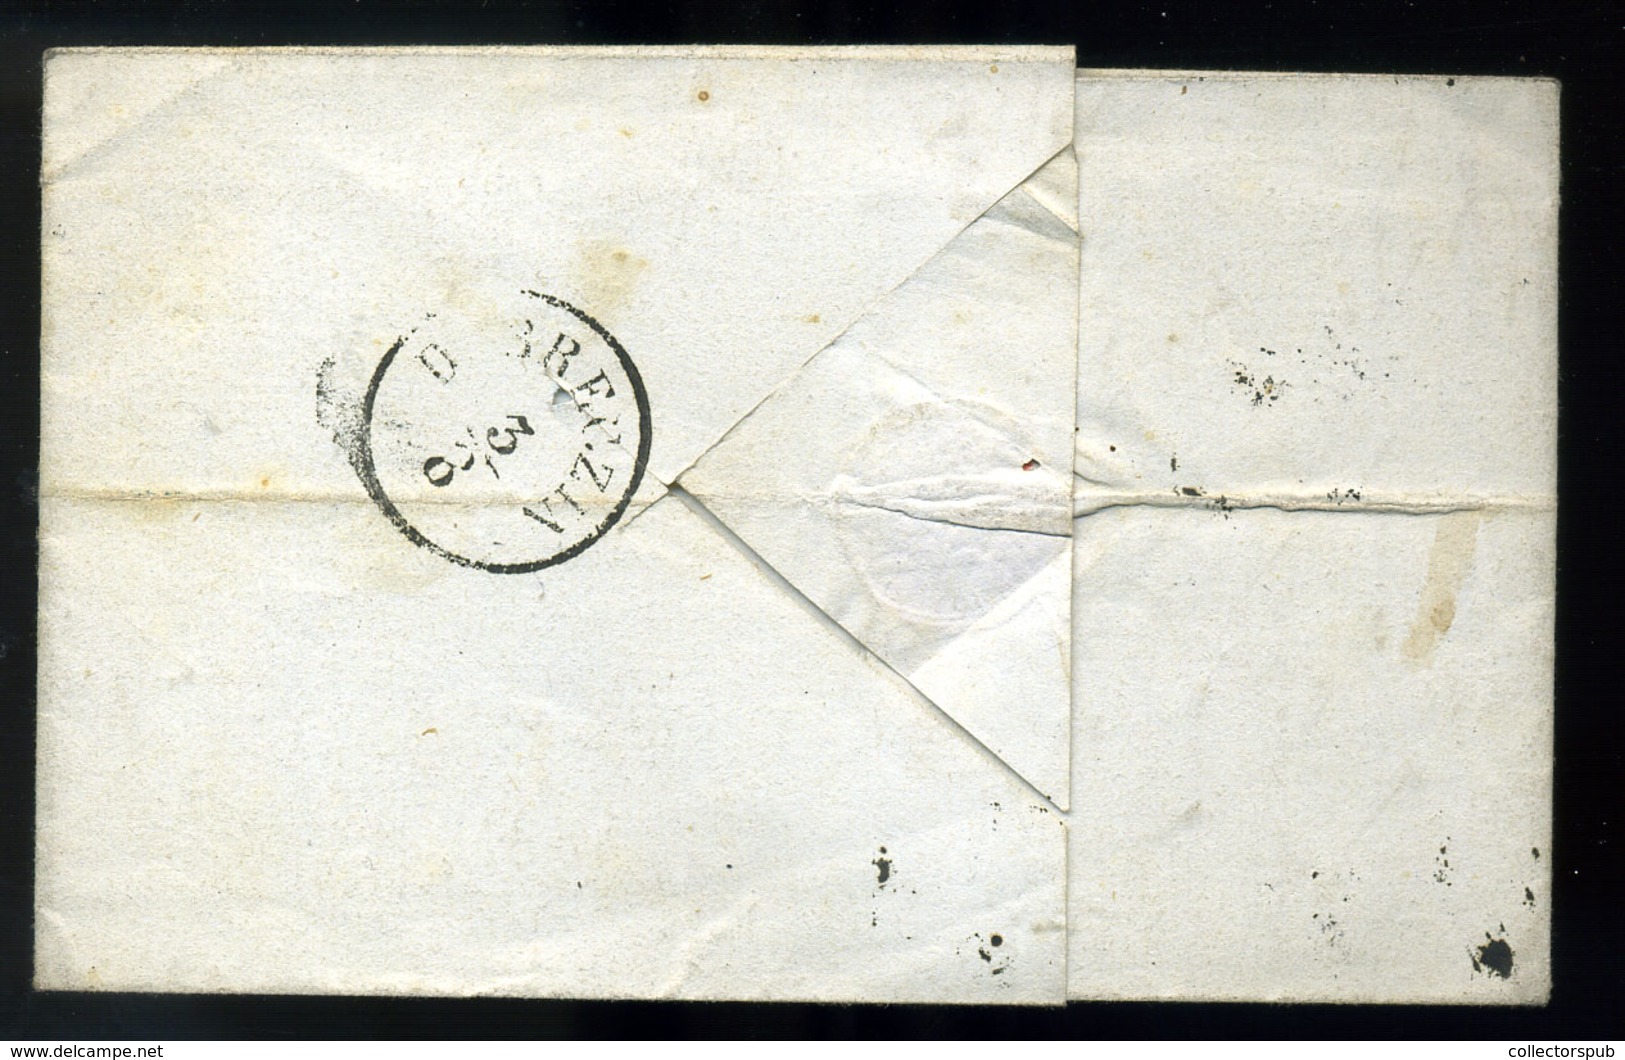 96354 TOKAJ 1853. 3Kr-os Levél, Tartalommal Debrecenbe Küldve - Used Stamps